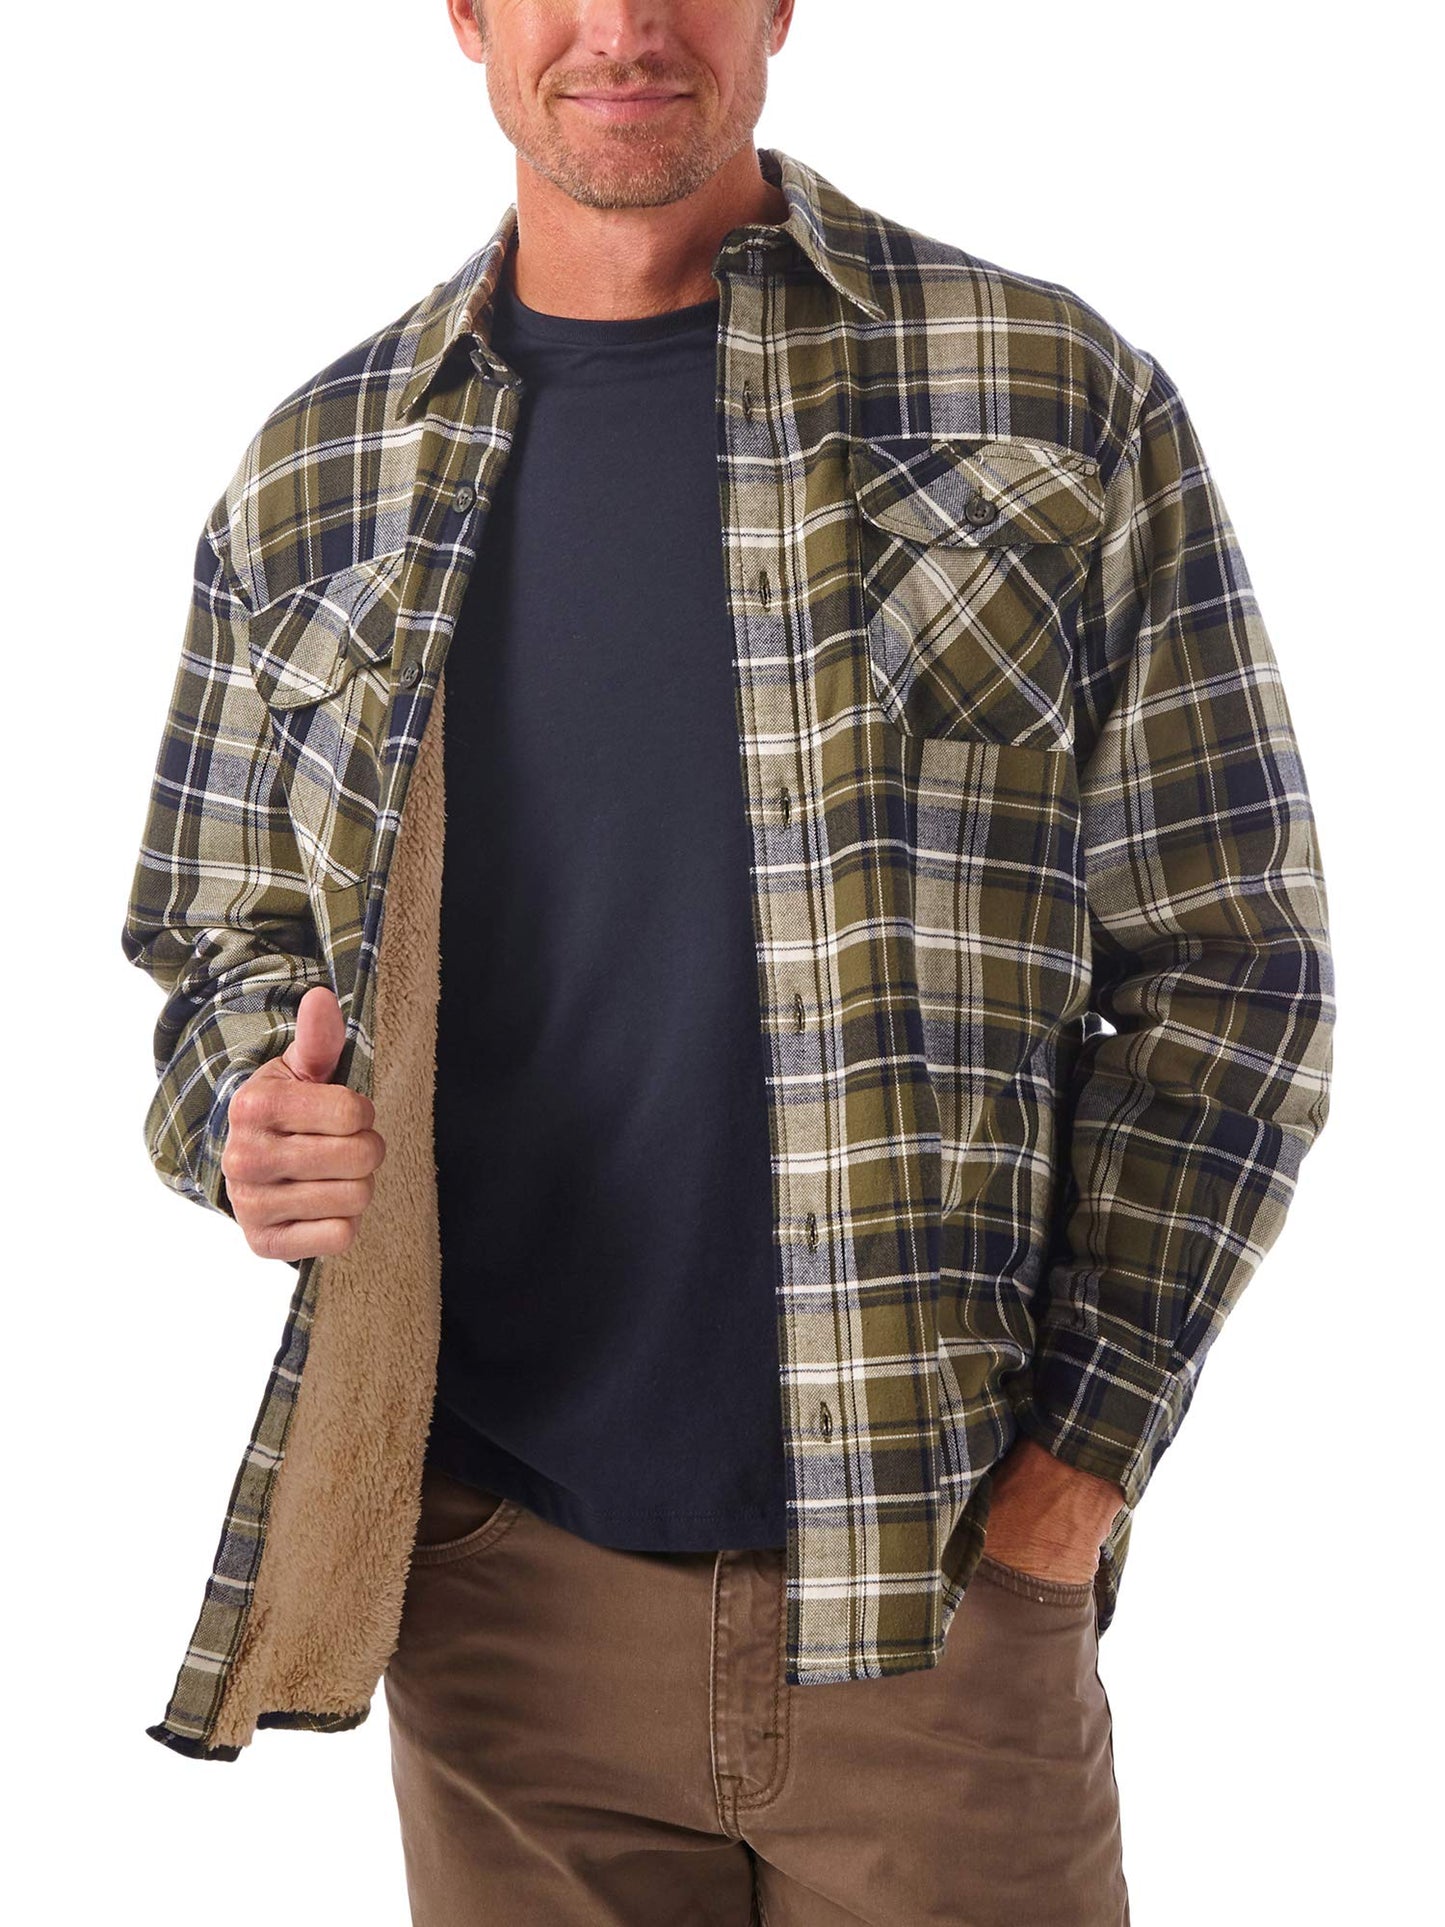 Wrangler Authentics Men's Long Sleeve Sherpa Lined Shirt Jacket, Olive Sky, XX-Large